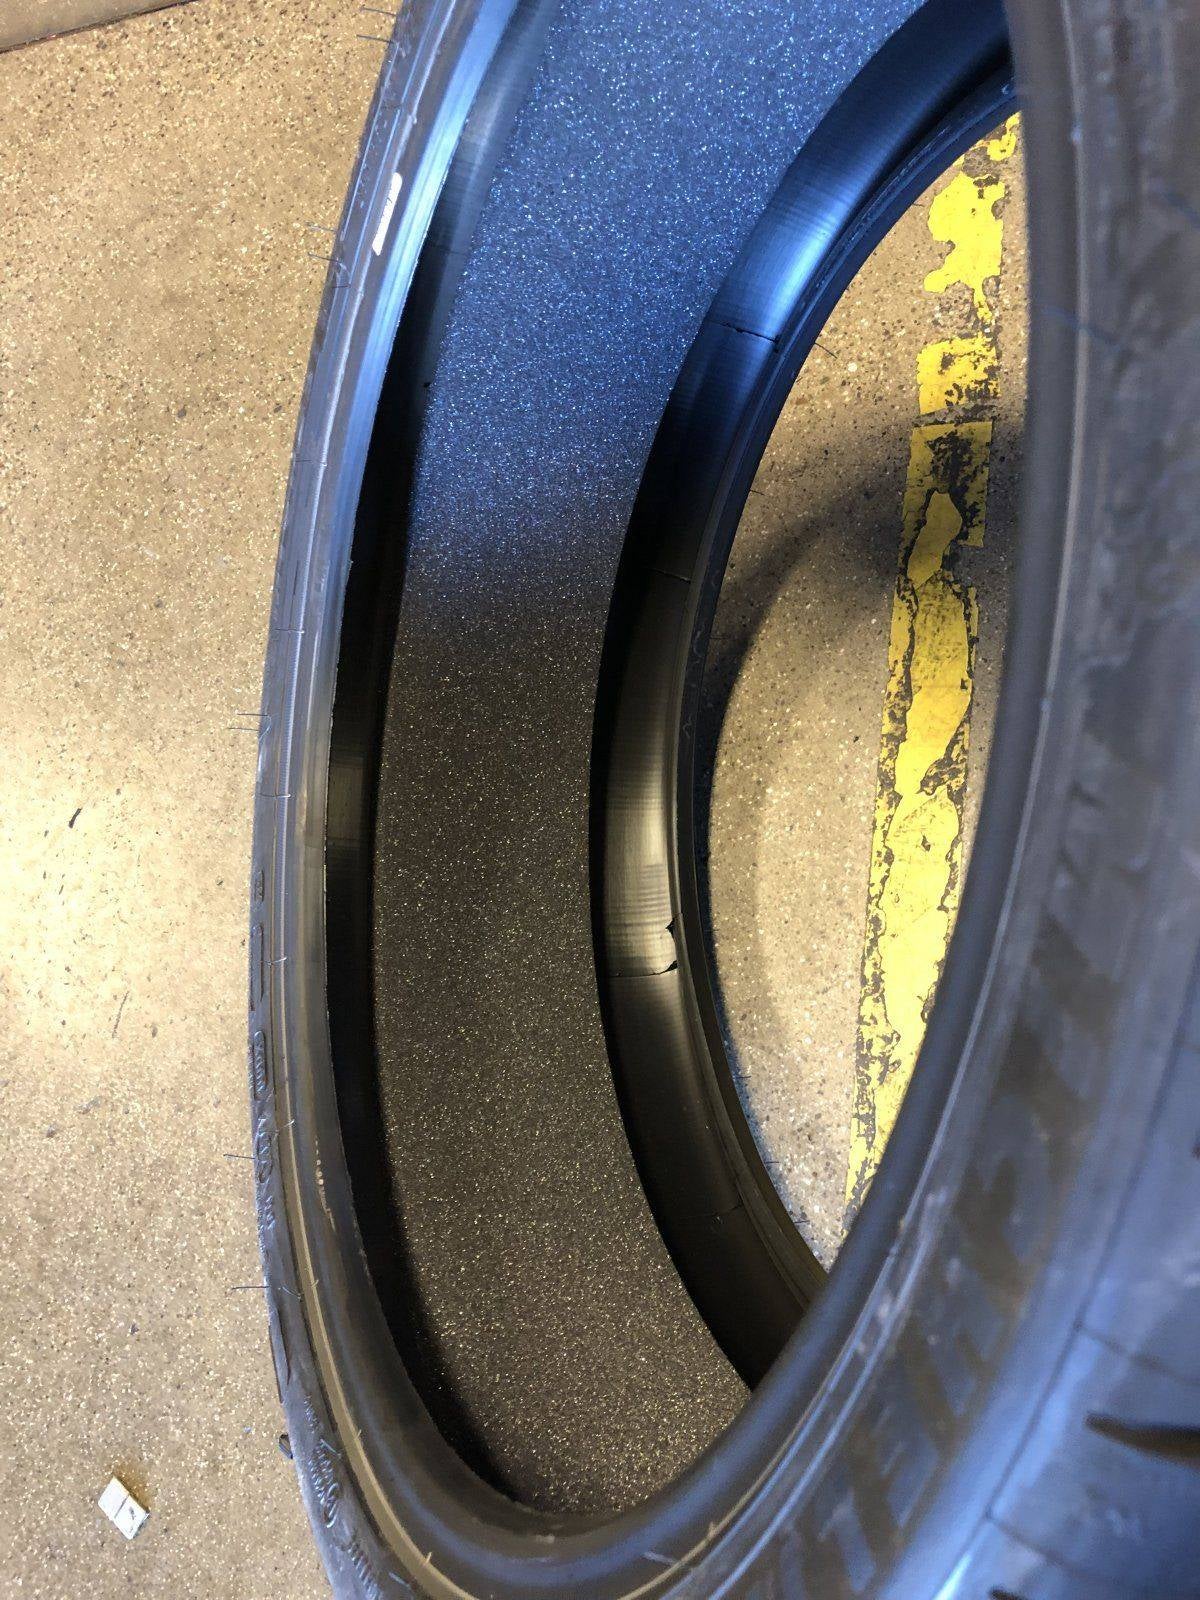 Bubble in sidewall & pictures of tire foam